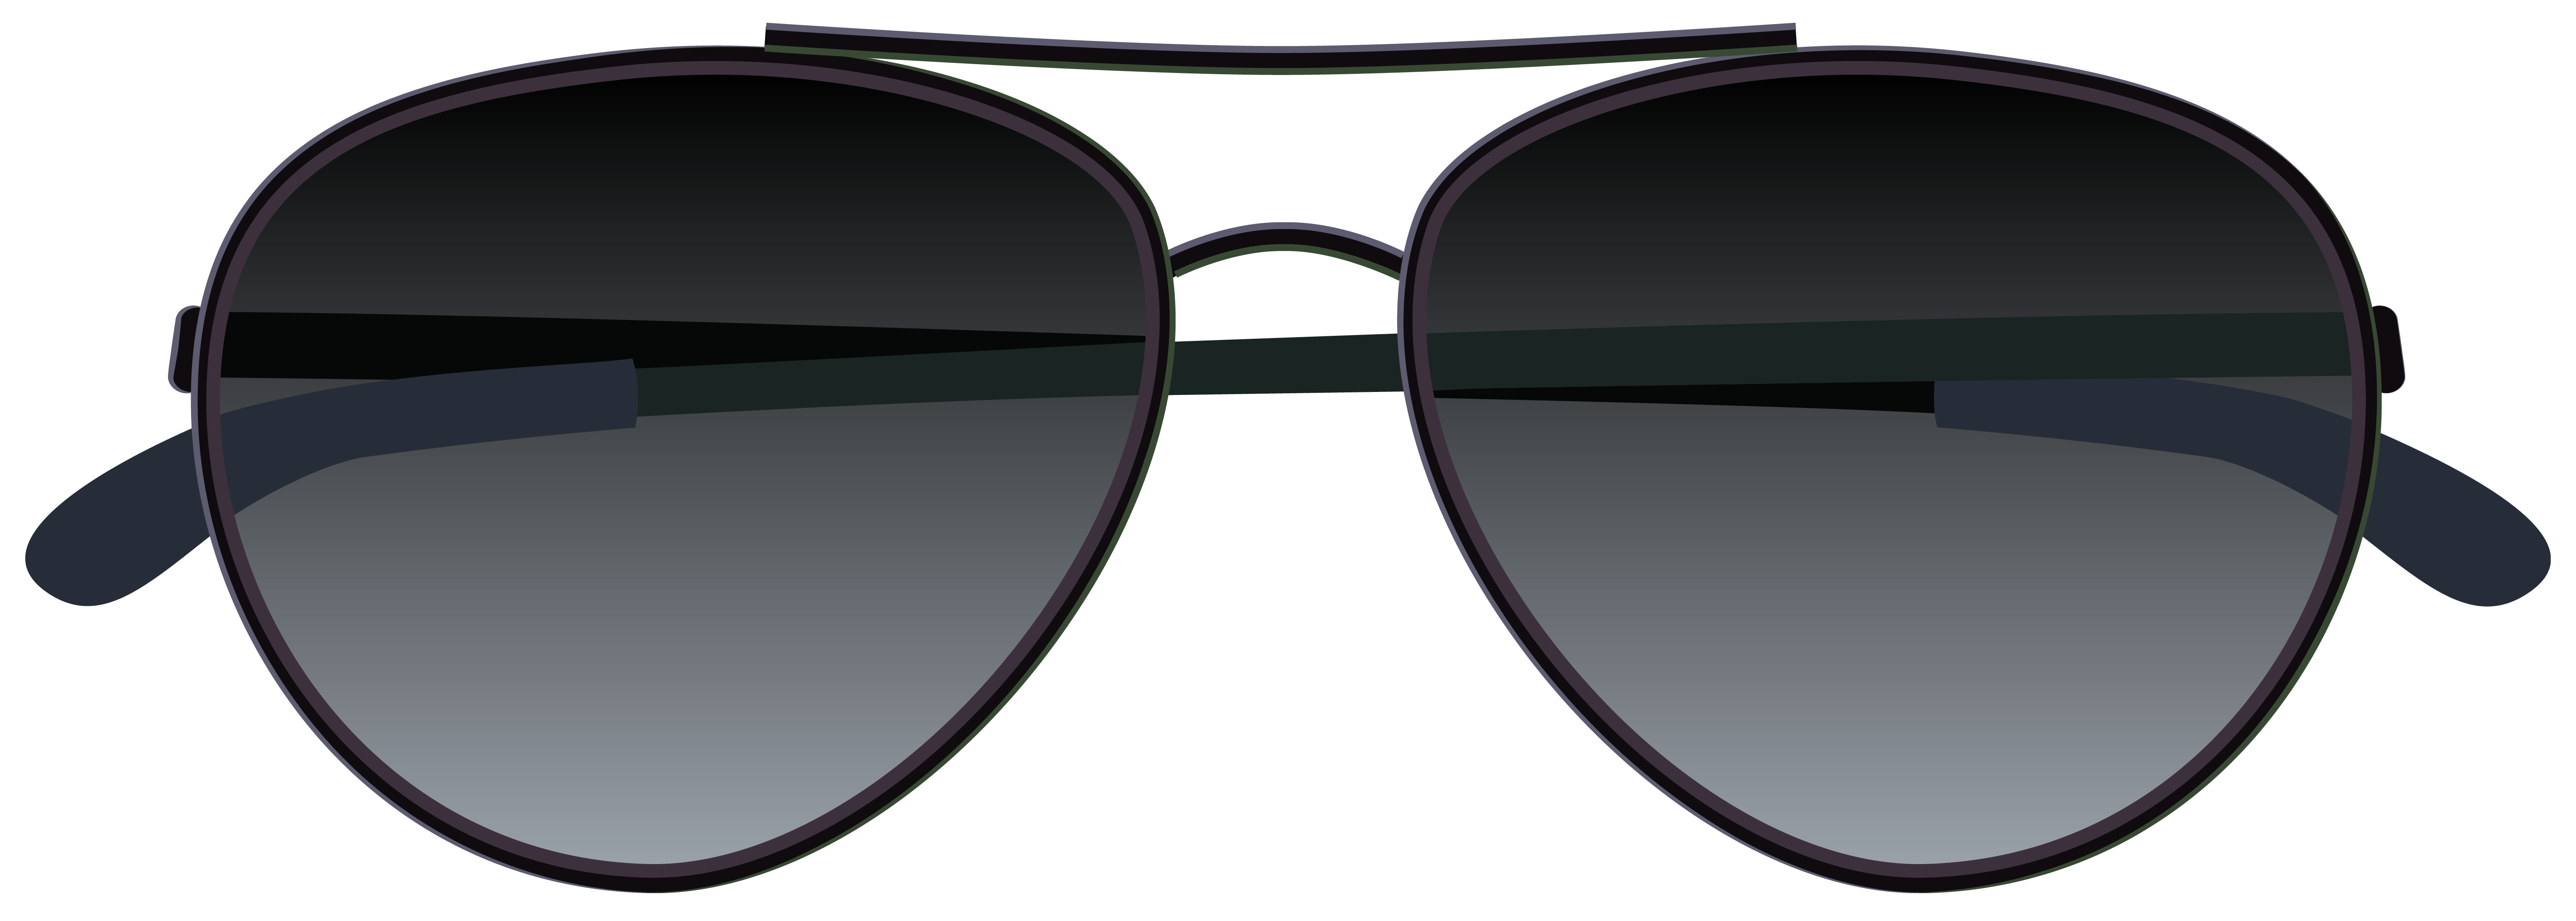 Sunglasses clipart free clip art 2 clipartbold